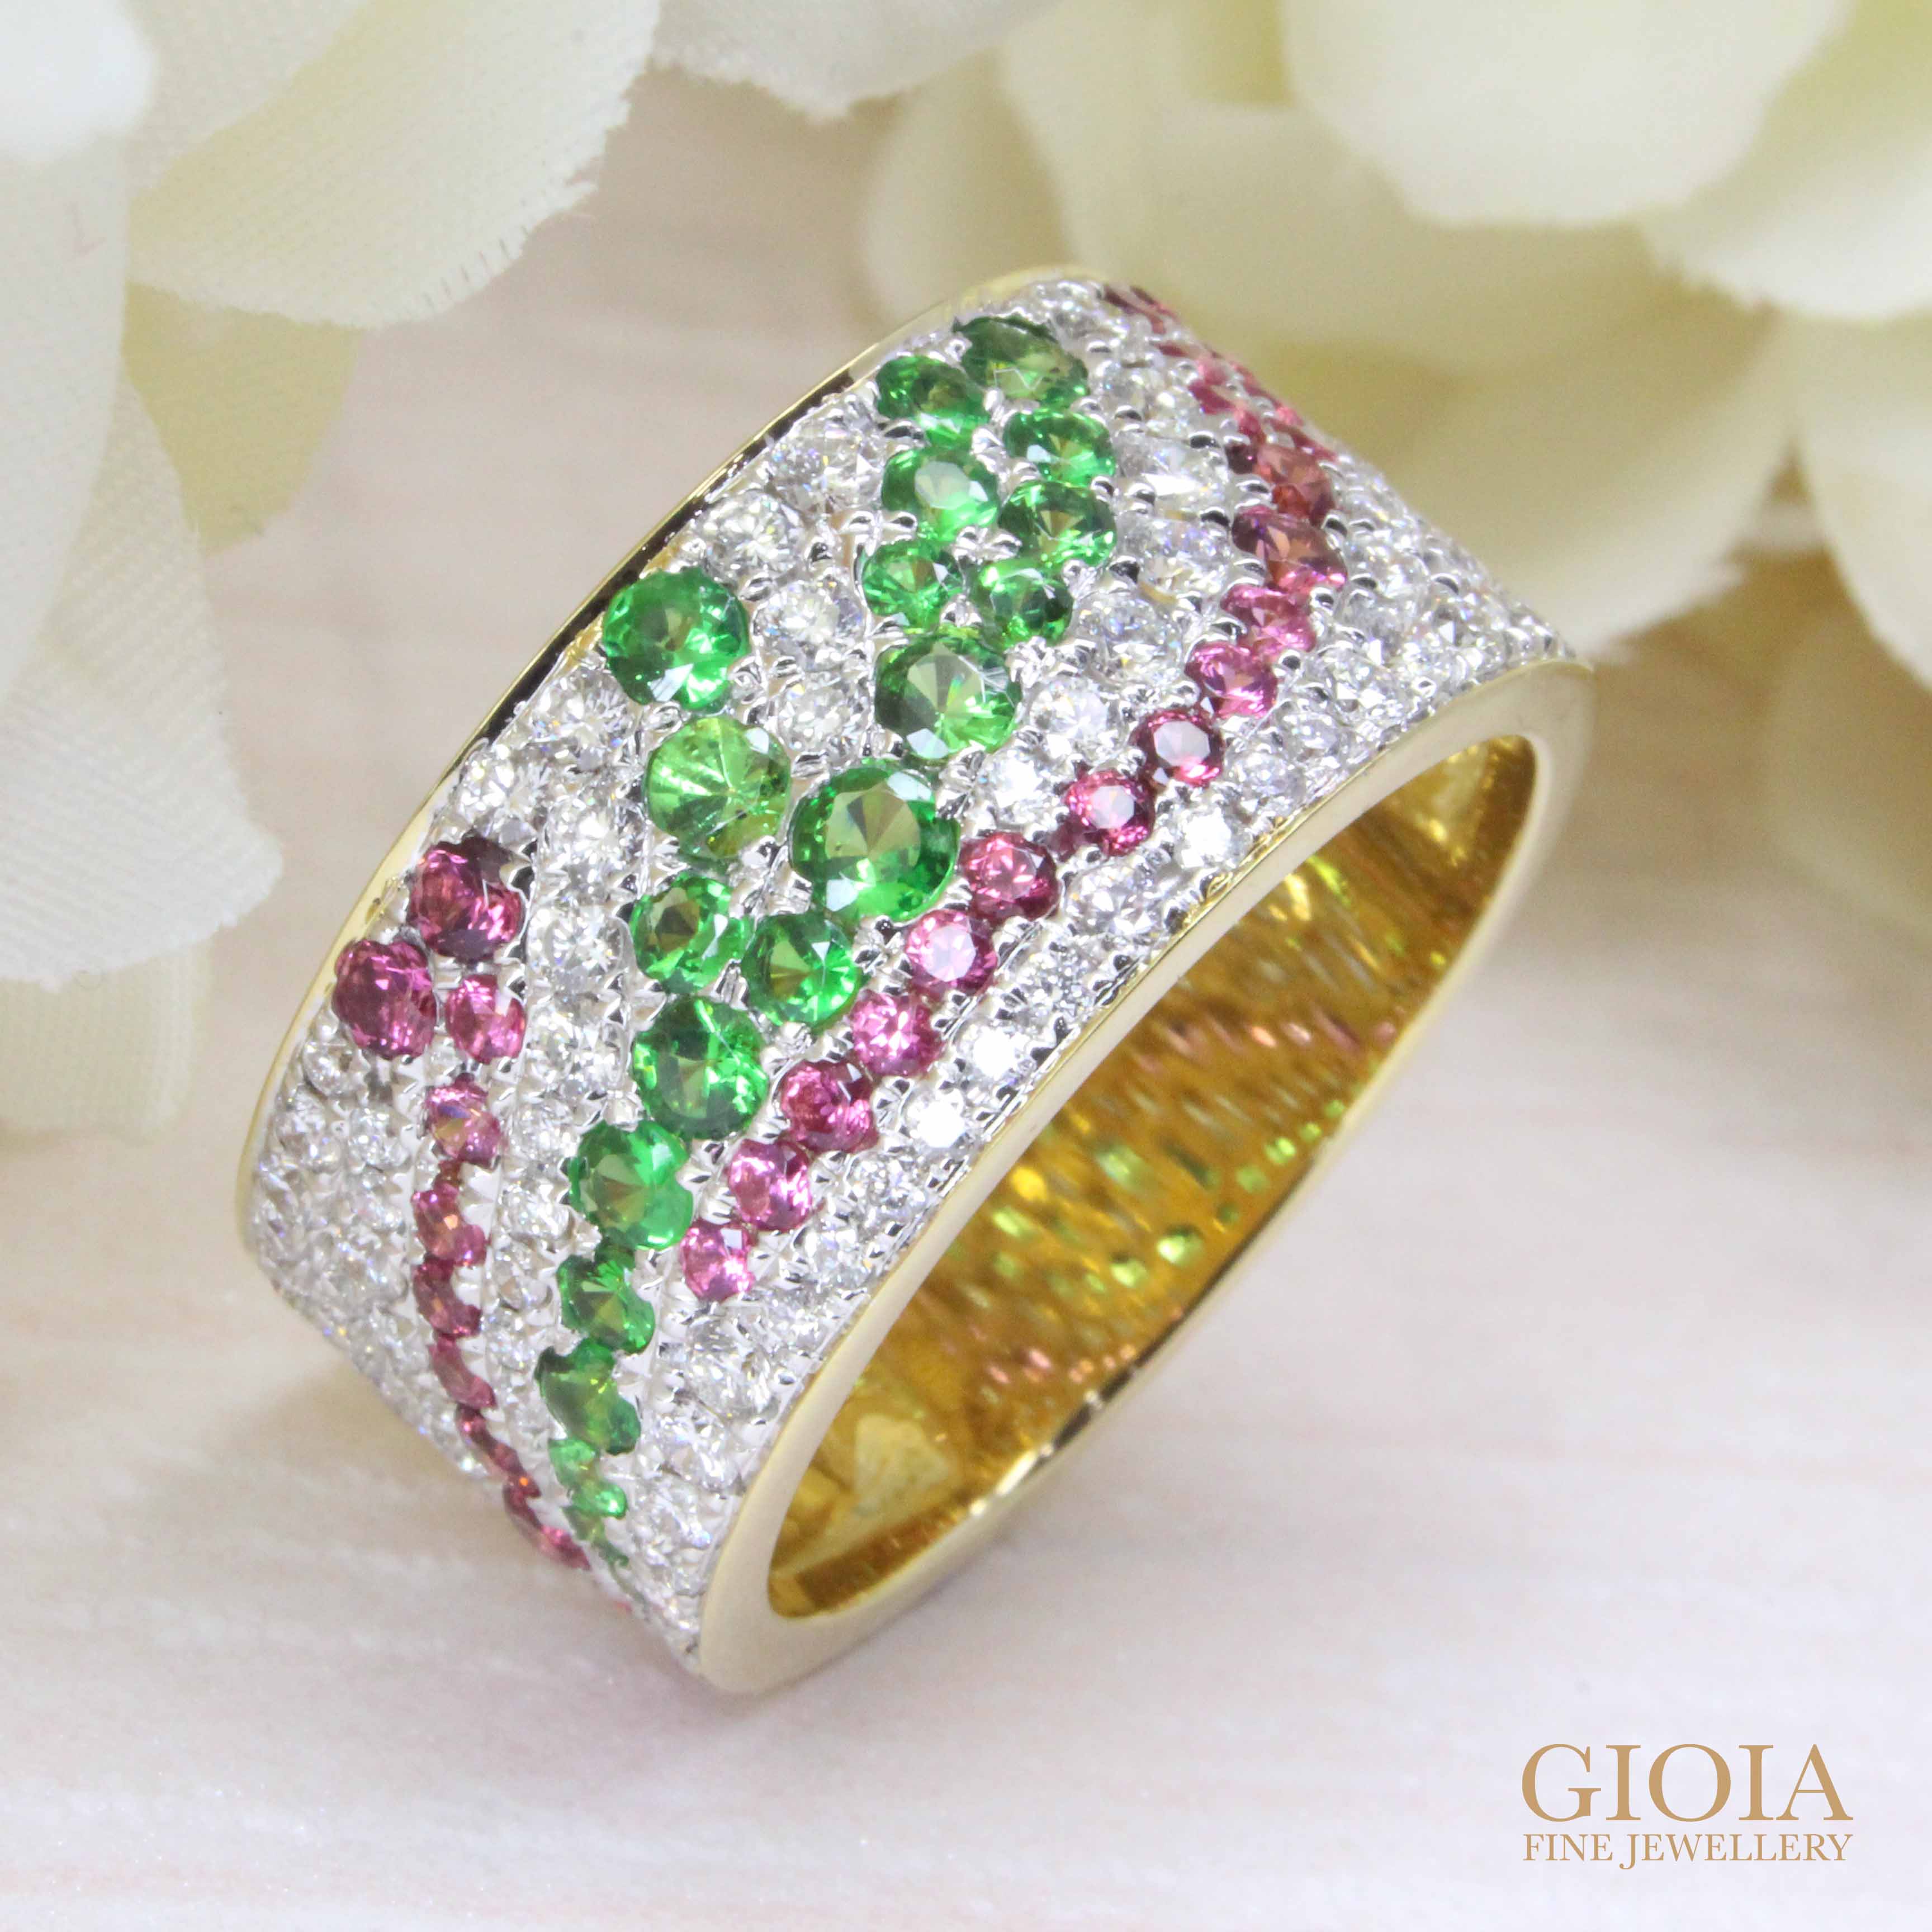 Customised Wedding Anniversary Ring, unique ring custom made for a wedding anniversary with coloured gemstone | Local Singapore customised jeweller in fine jewellery